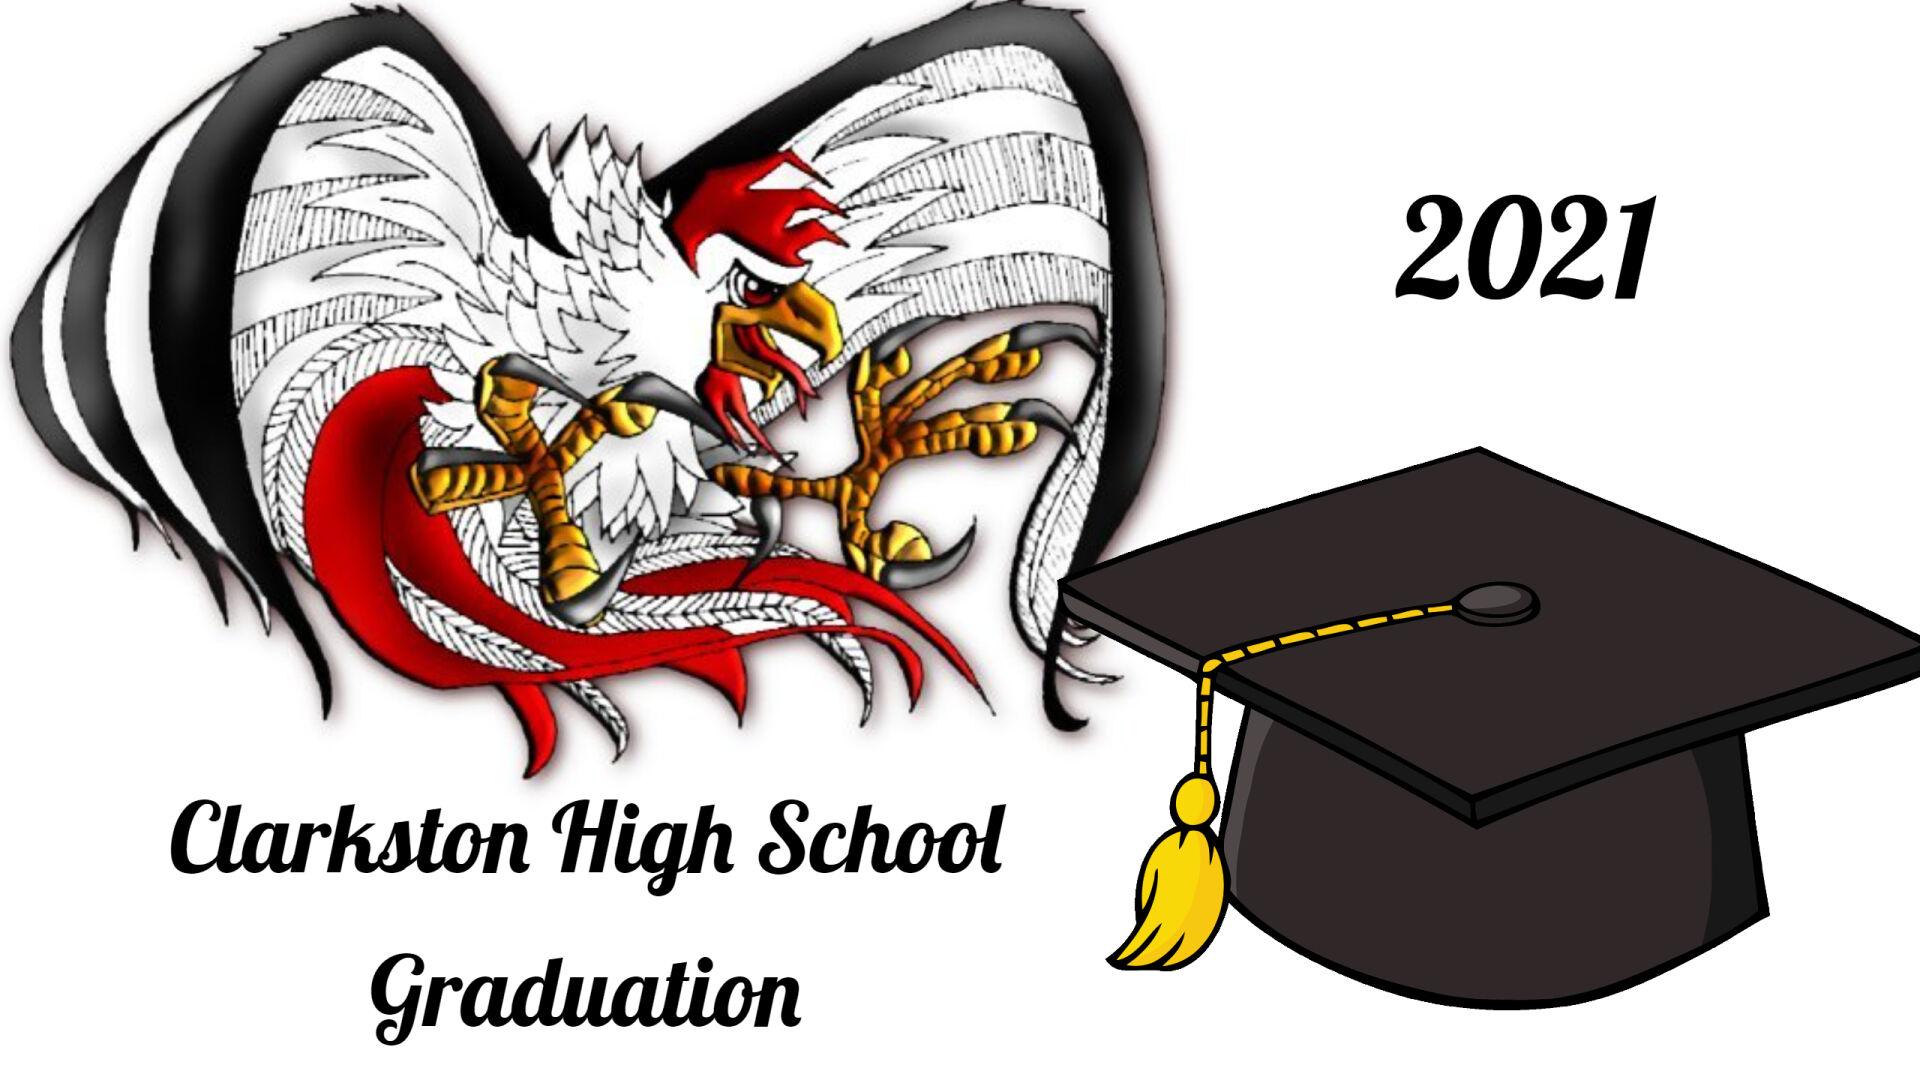 Clarkston High School Planning InPerson Graduation Ceremony For 2021